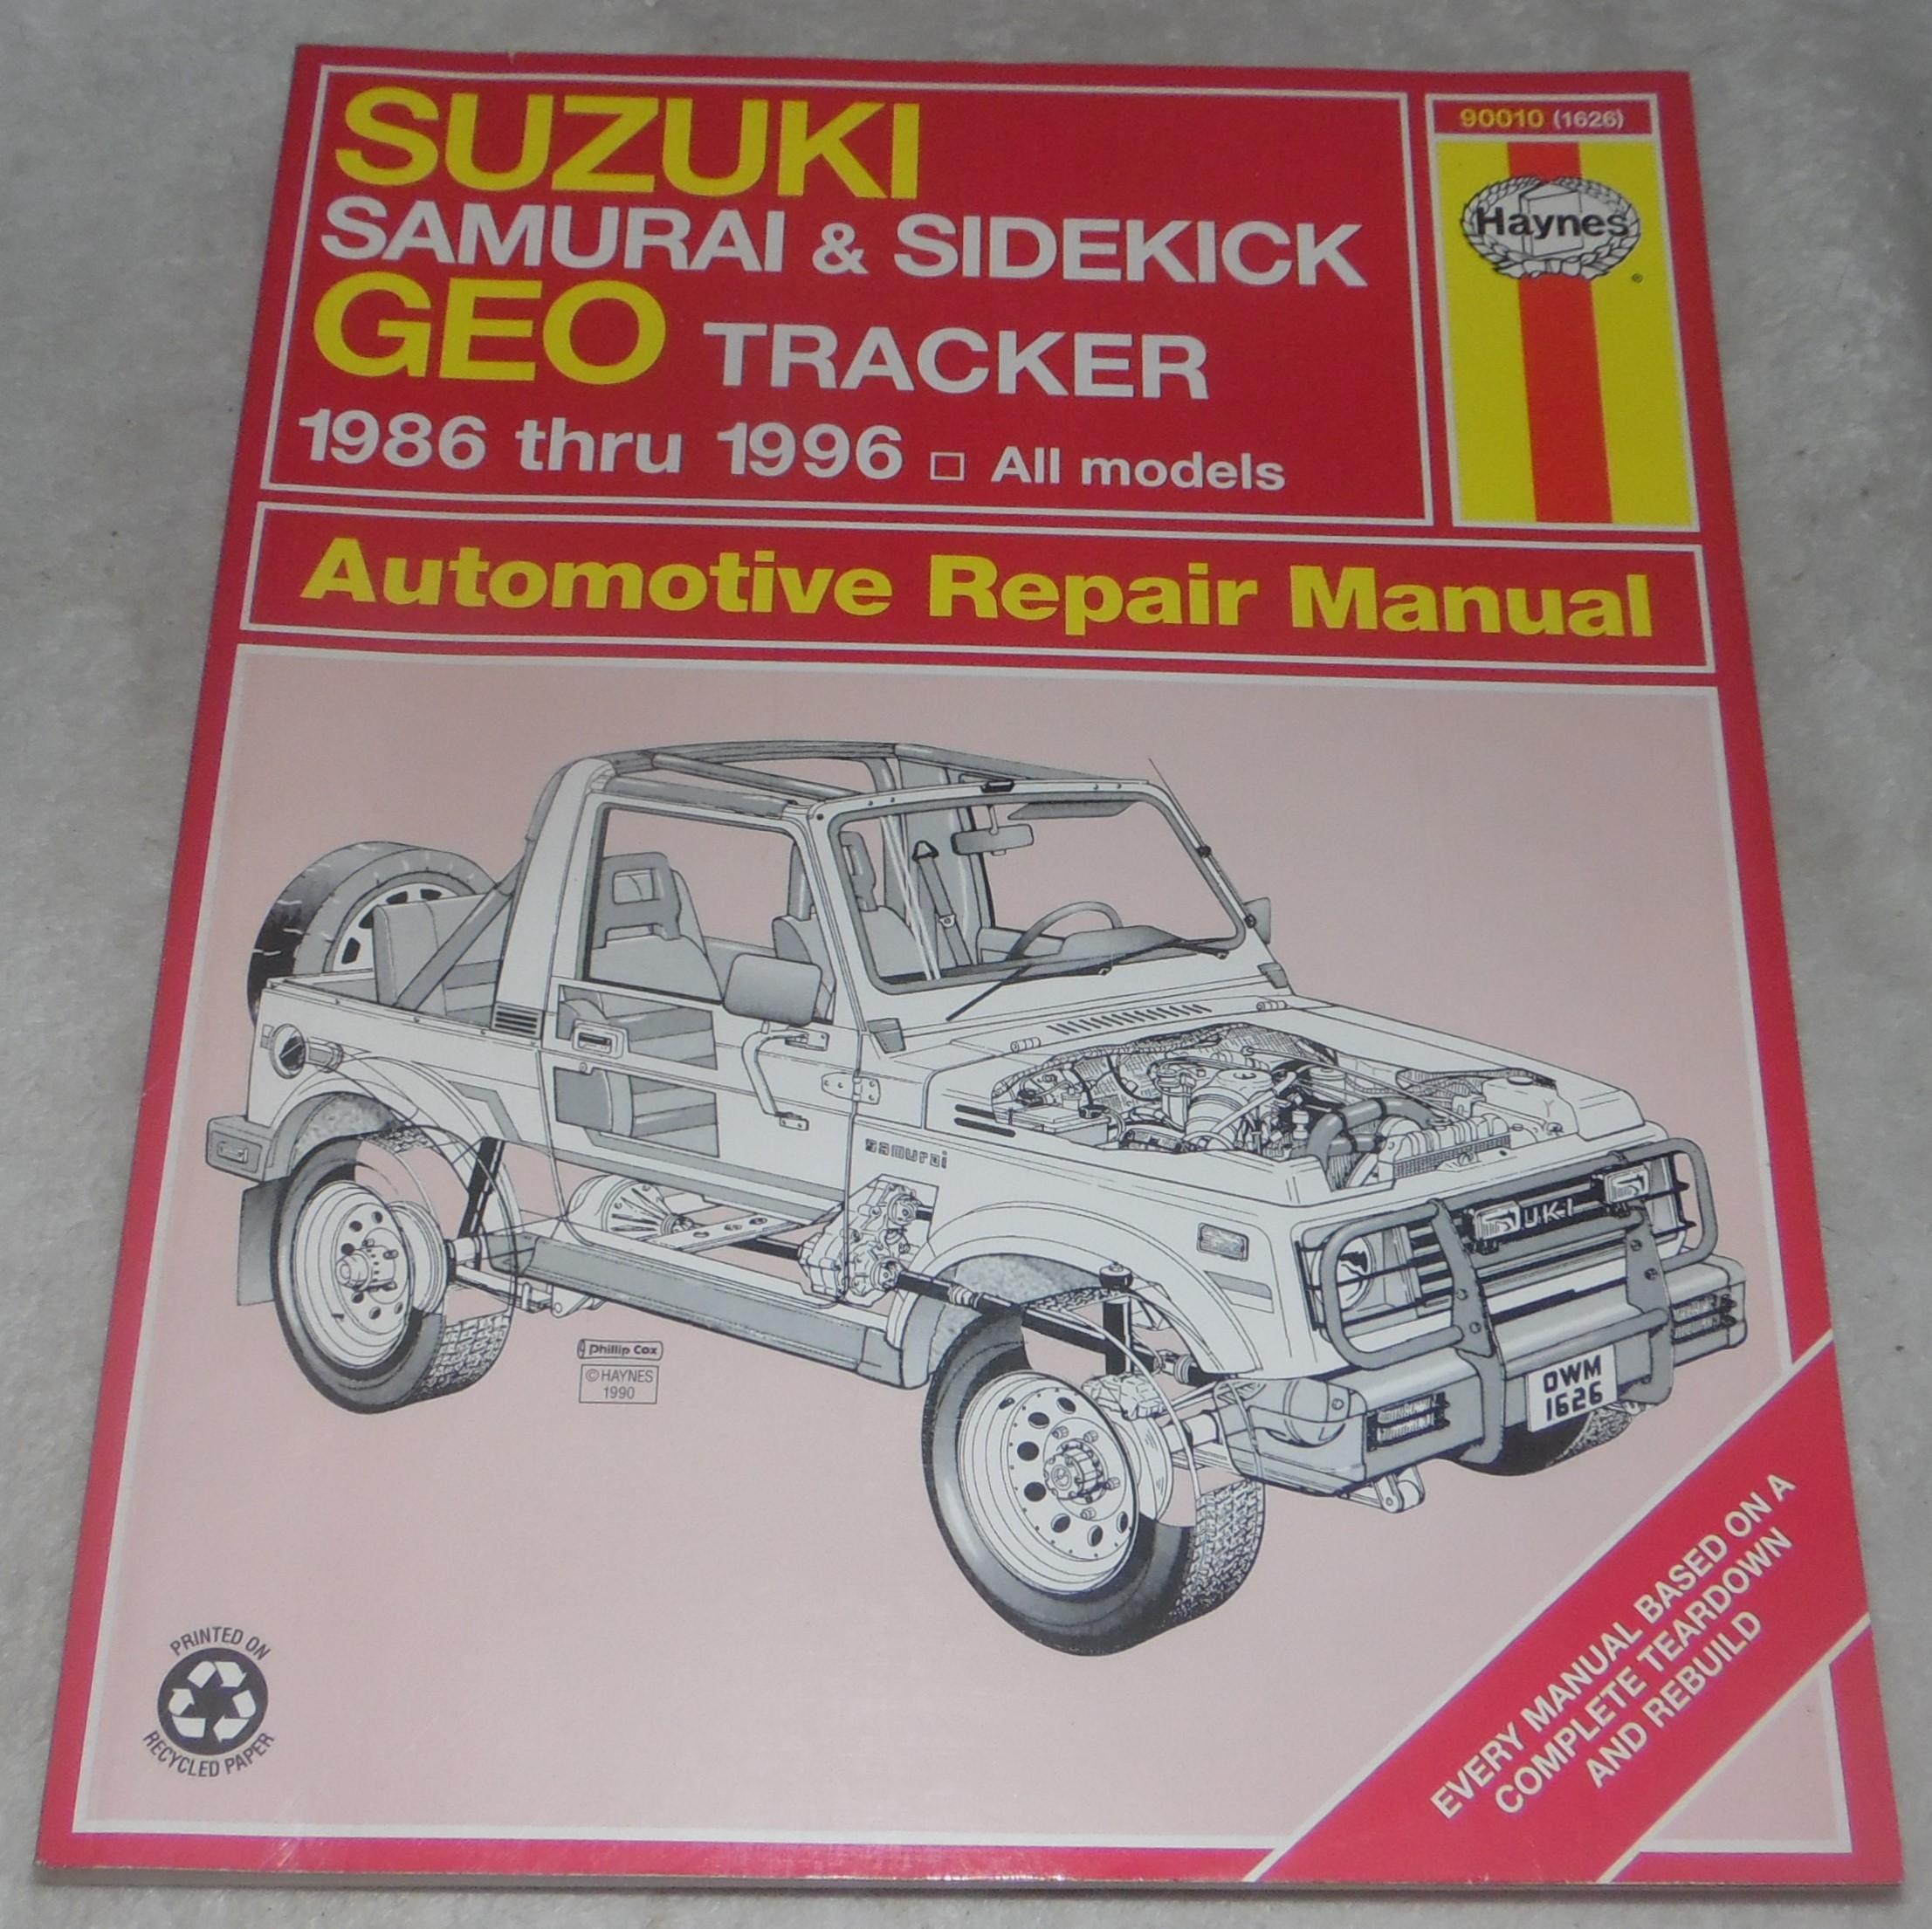 Suzuki Samurai & Sidekick Geo Tracker 1986 Thru 1996: All Models (Haynes Automotive Repair Manual Series) - Henderson, Bob; Haynes, John Harold